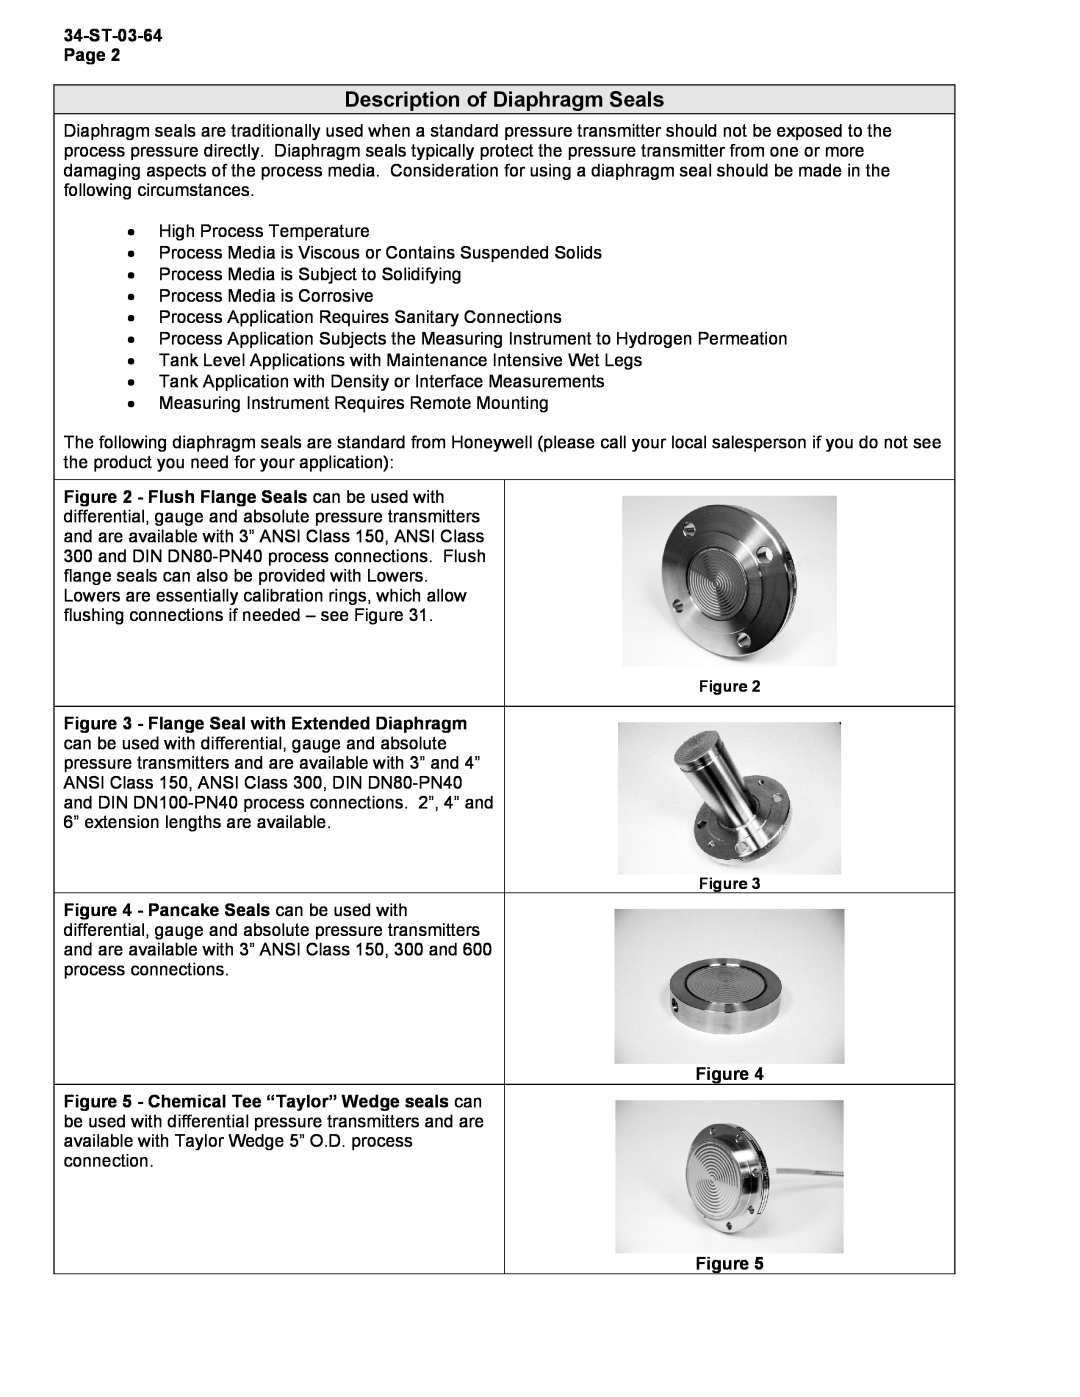 Honeywell STR12D warranty Description of Diaphragm Seals 